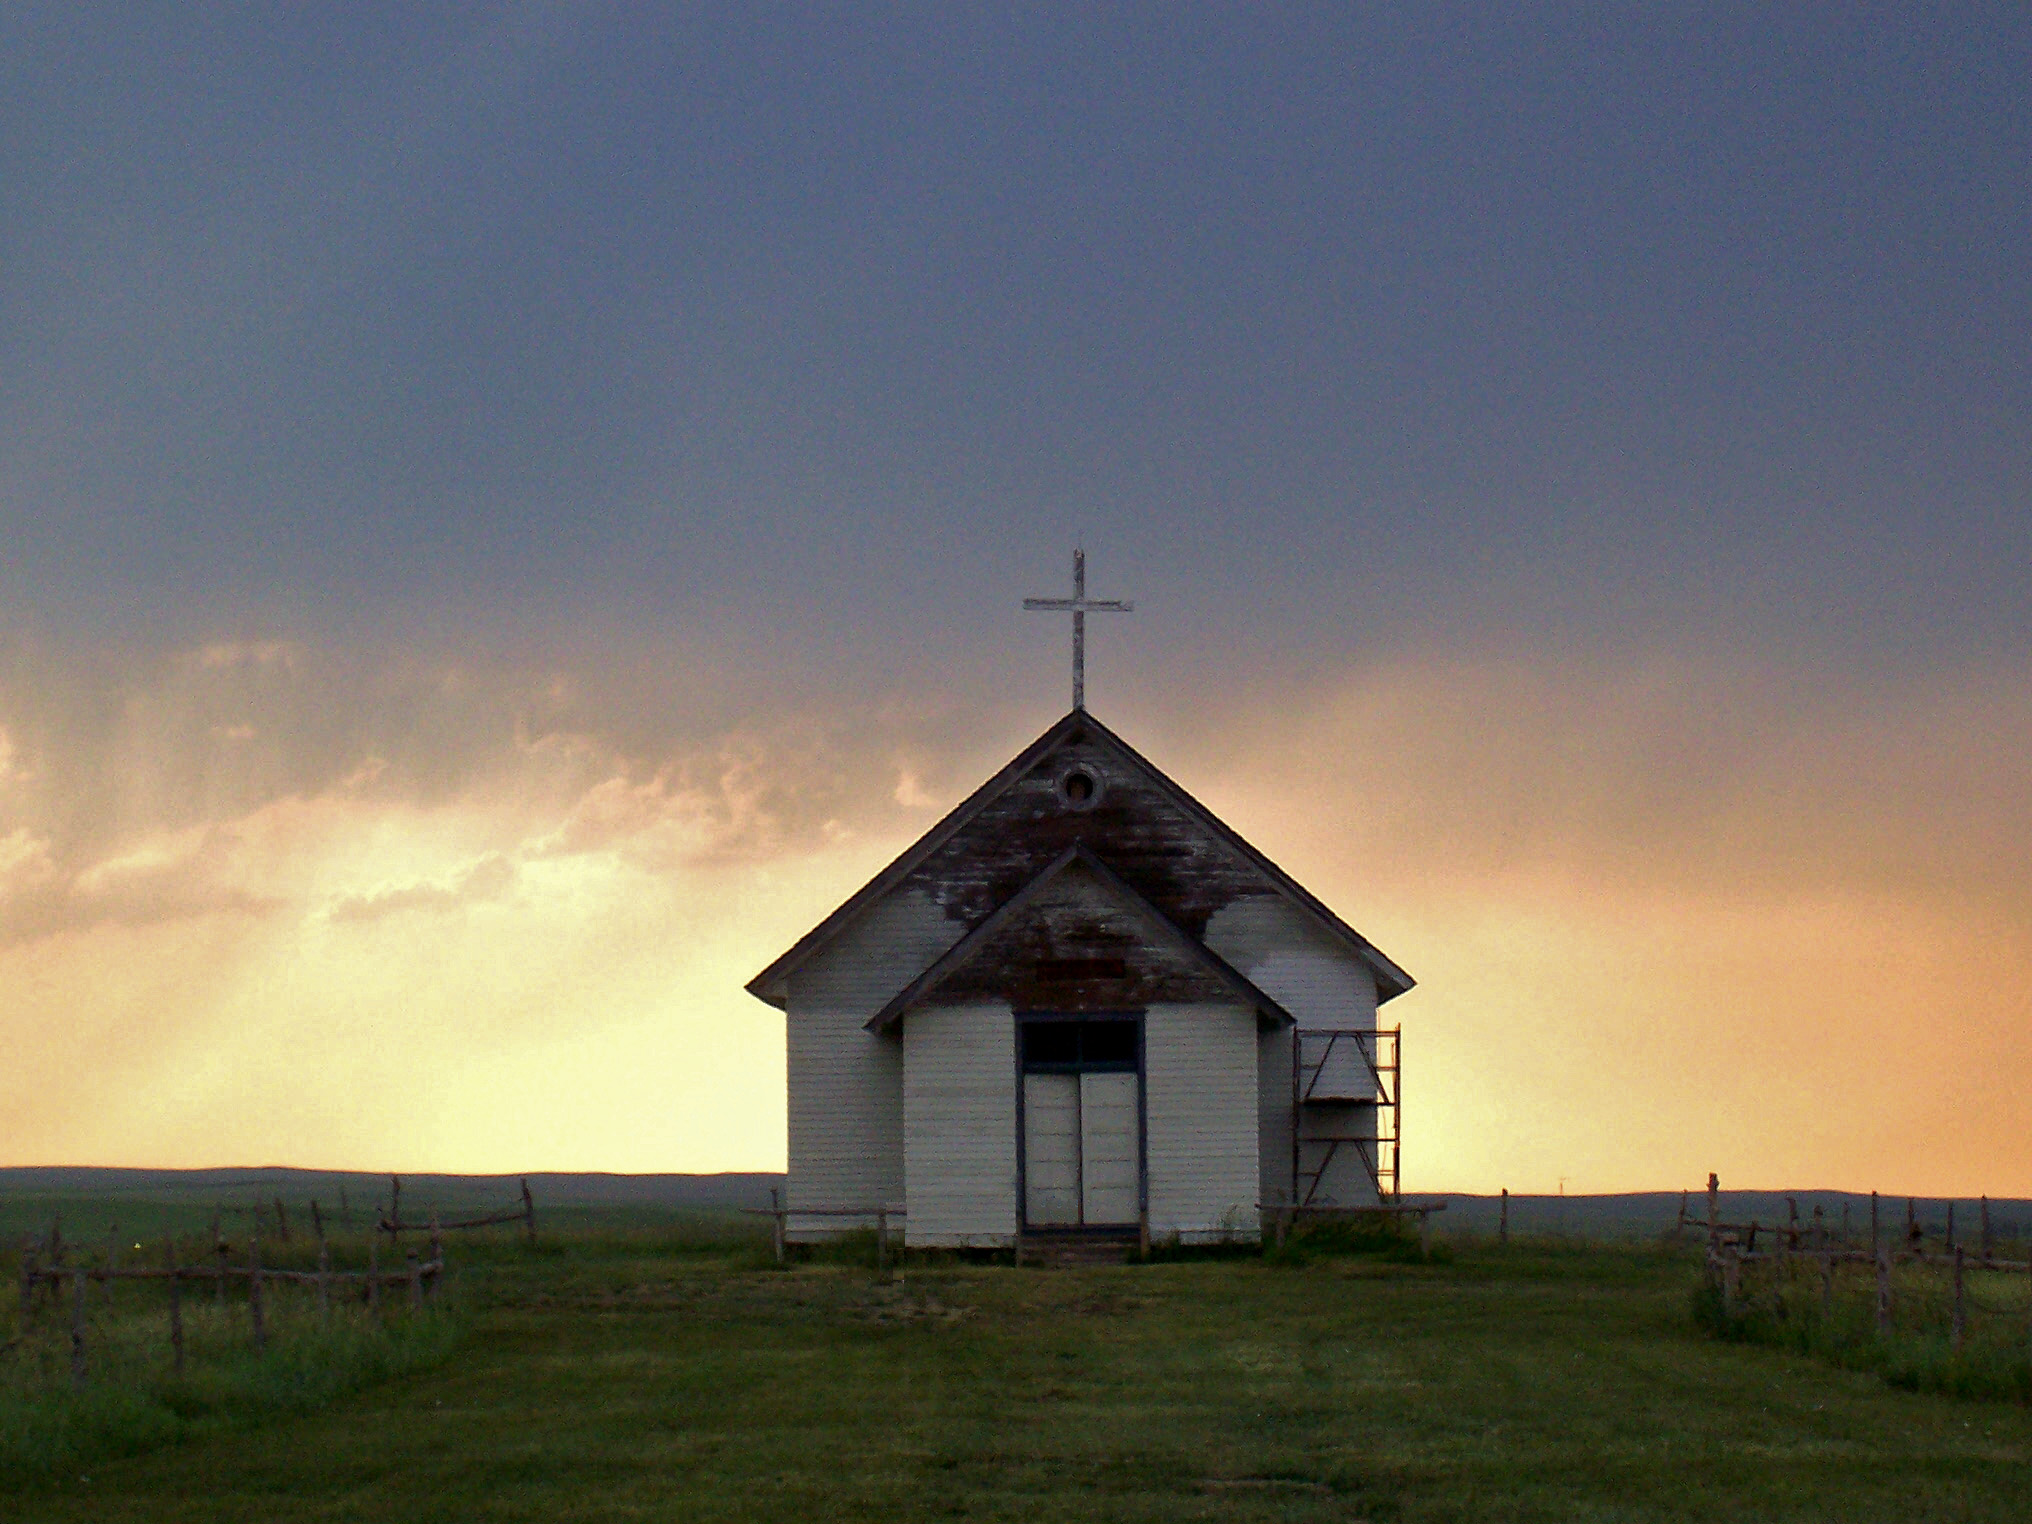 File:Little church on the prairie.jpg - Wikimedia Commons